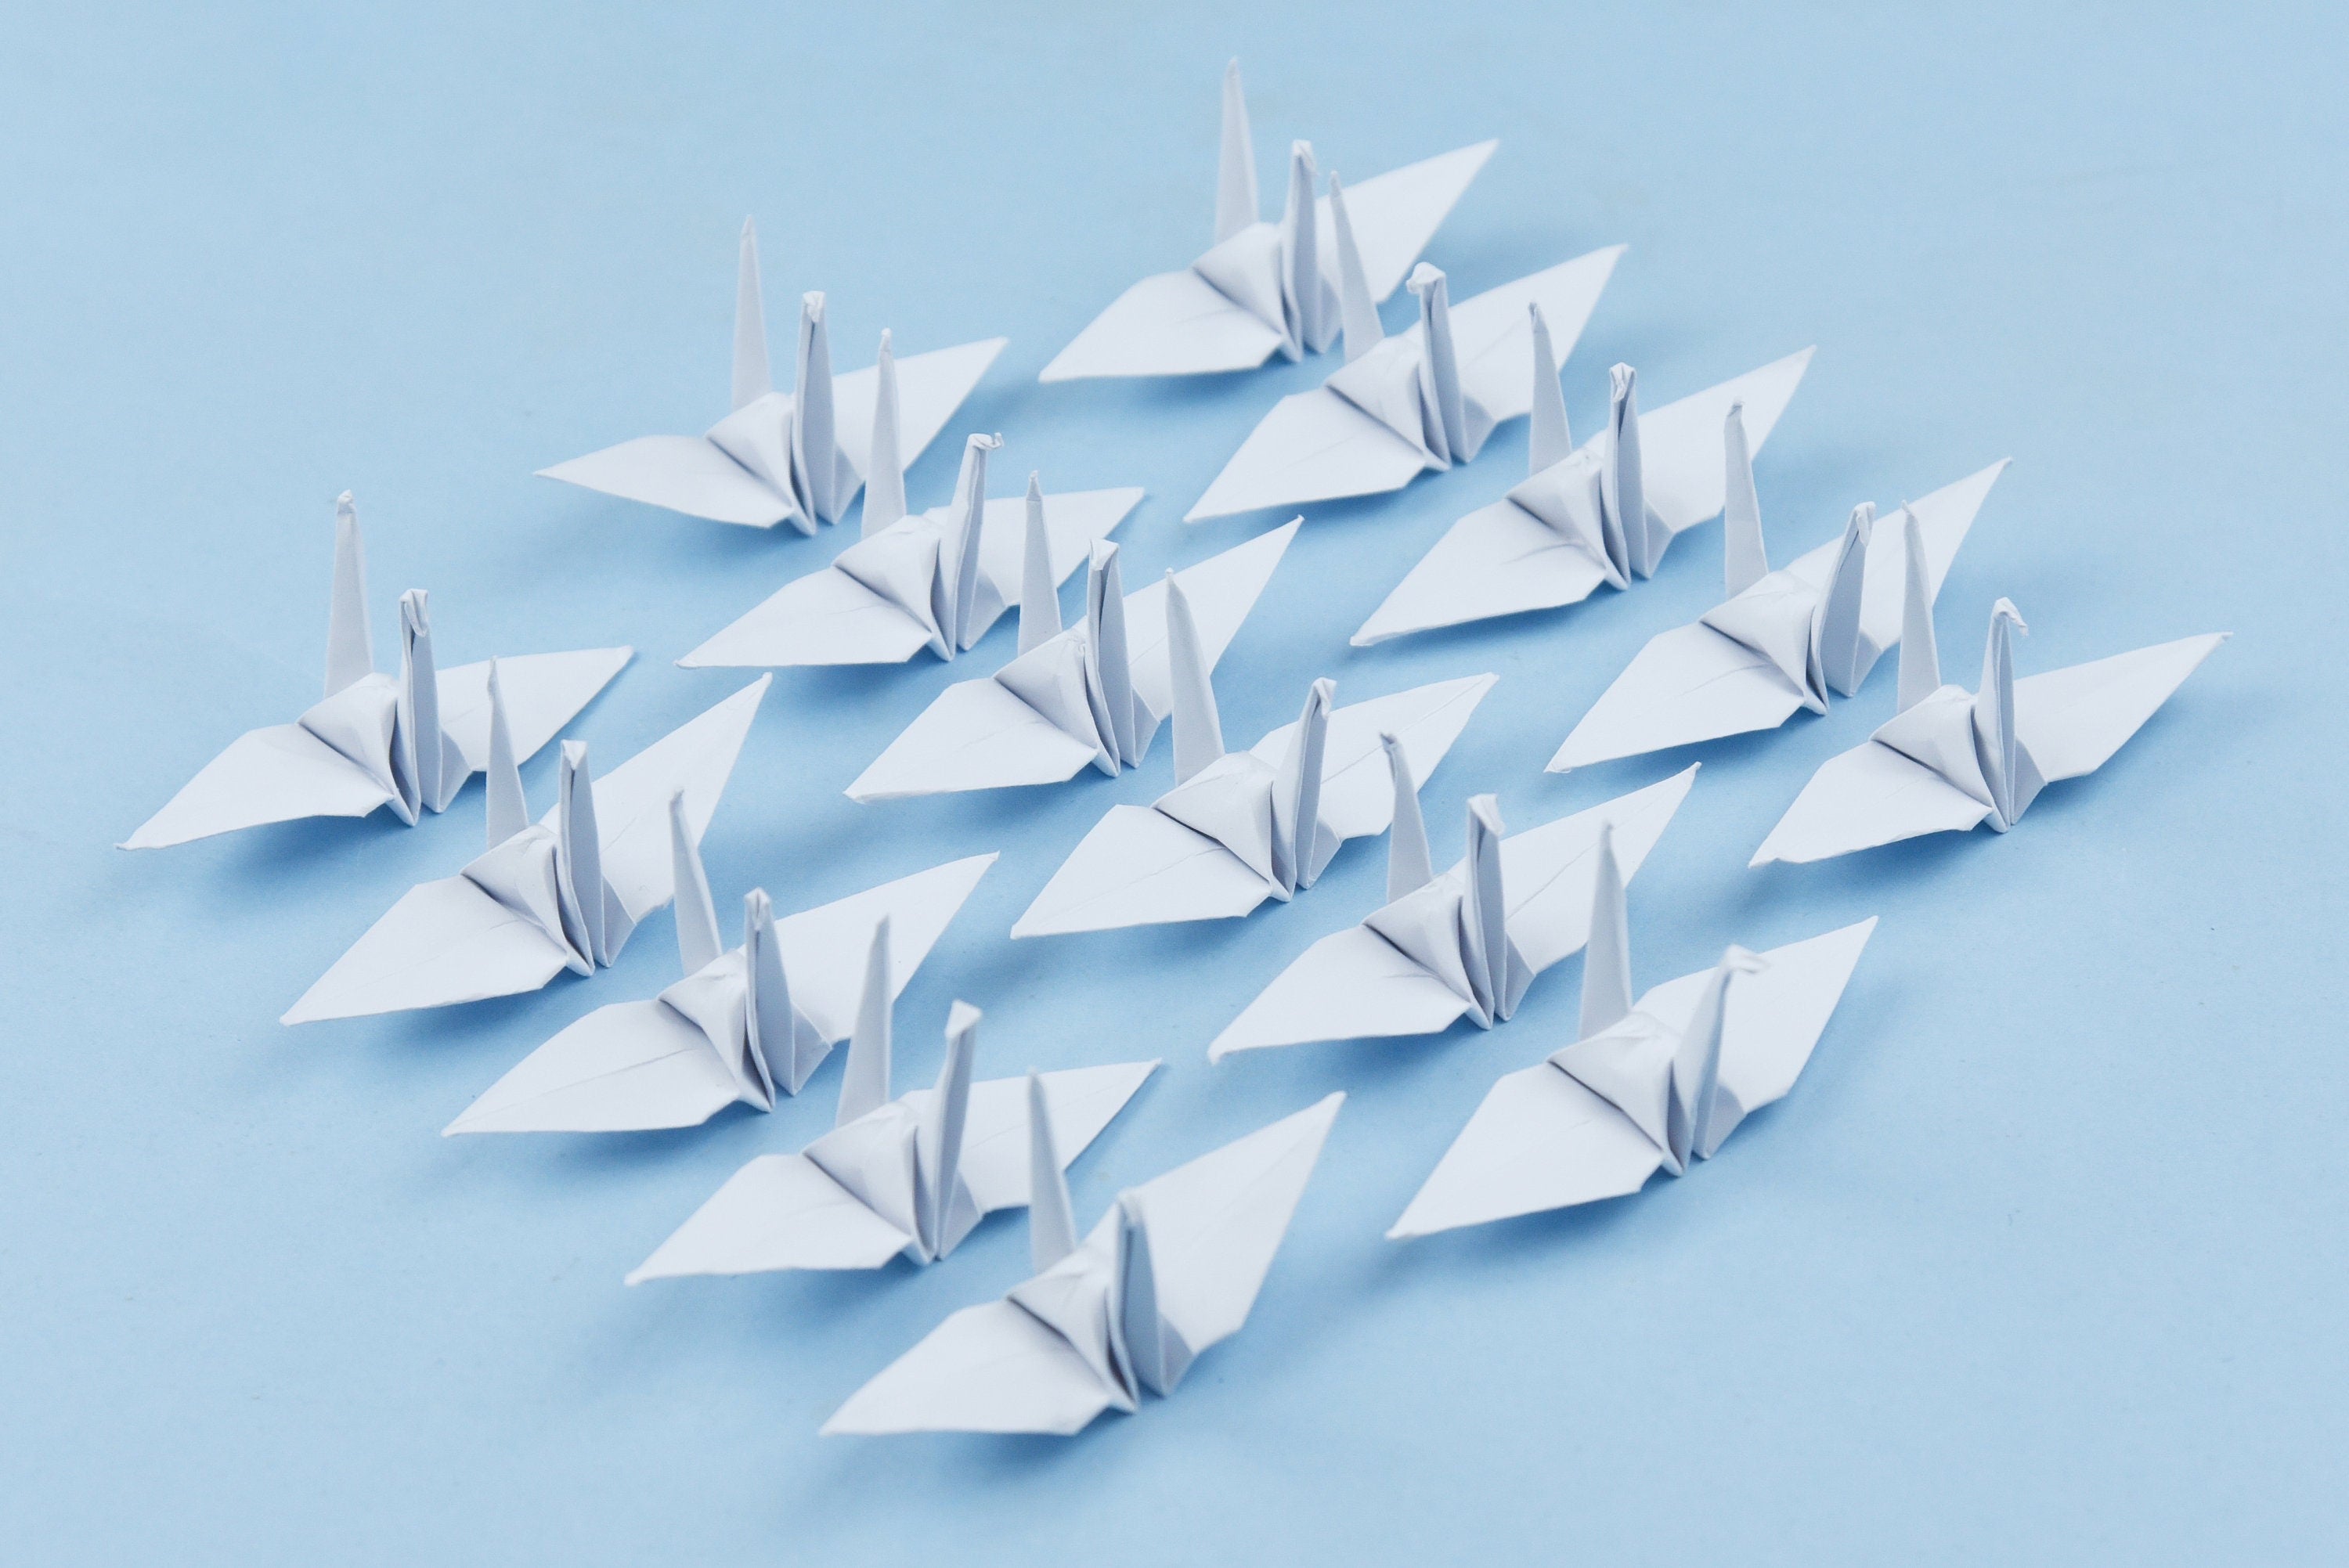 100 gru Origami bianche - 3x3 pollici - Prefabbricate per decorazioni di nozze, regali di anniversario, San Valentino, fondale